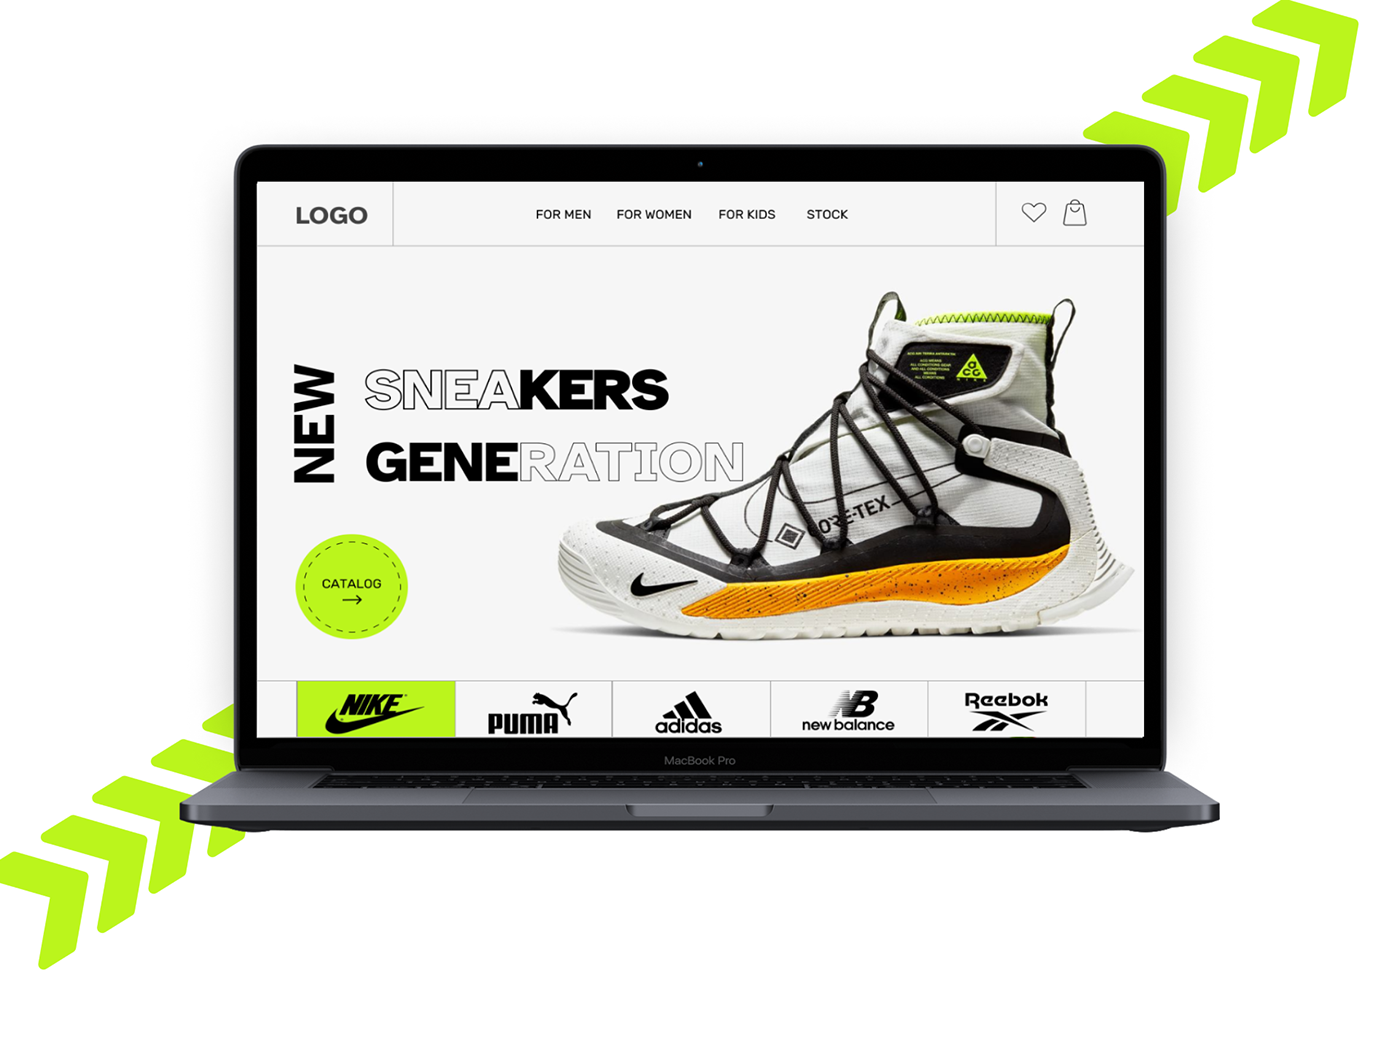 design animation  Figma online store Online shop Shopping Nike shop Ecommerce UI/UX